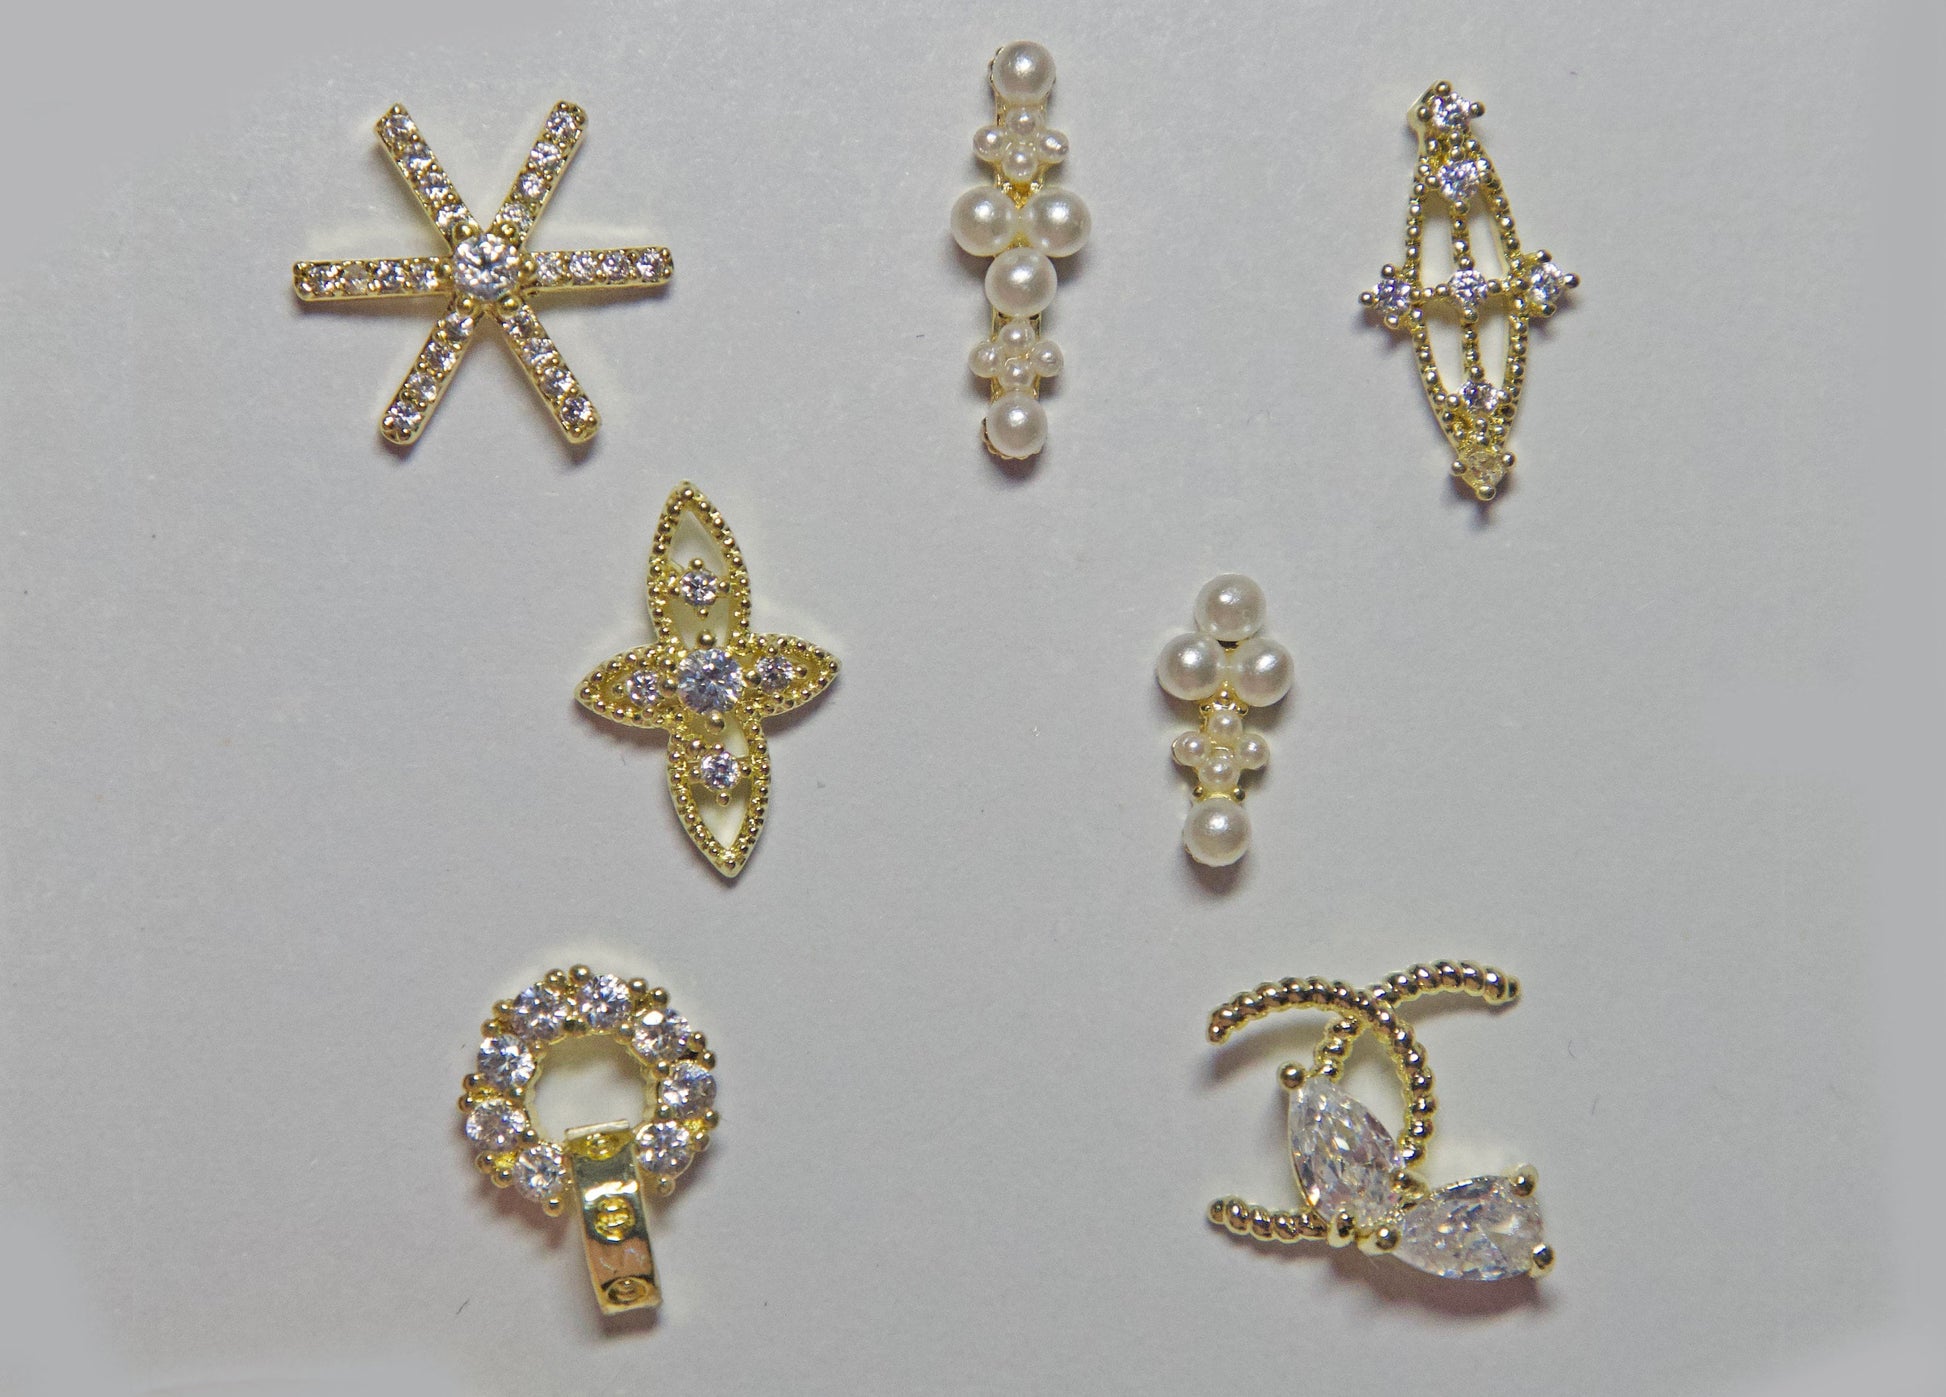 Christmas Snow 14k Gold Zircon Nail Art Jewelry